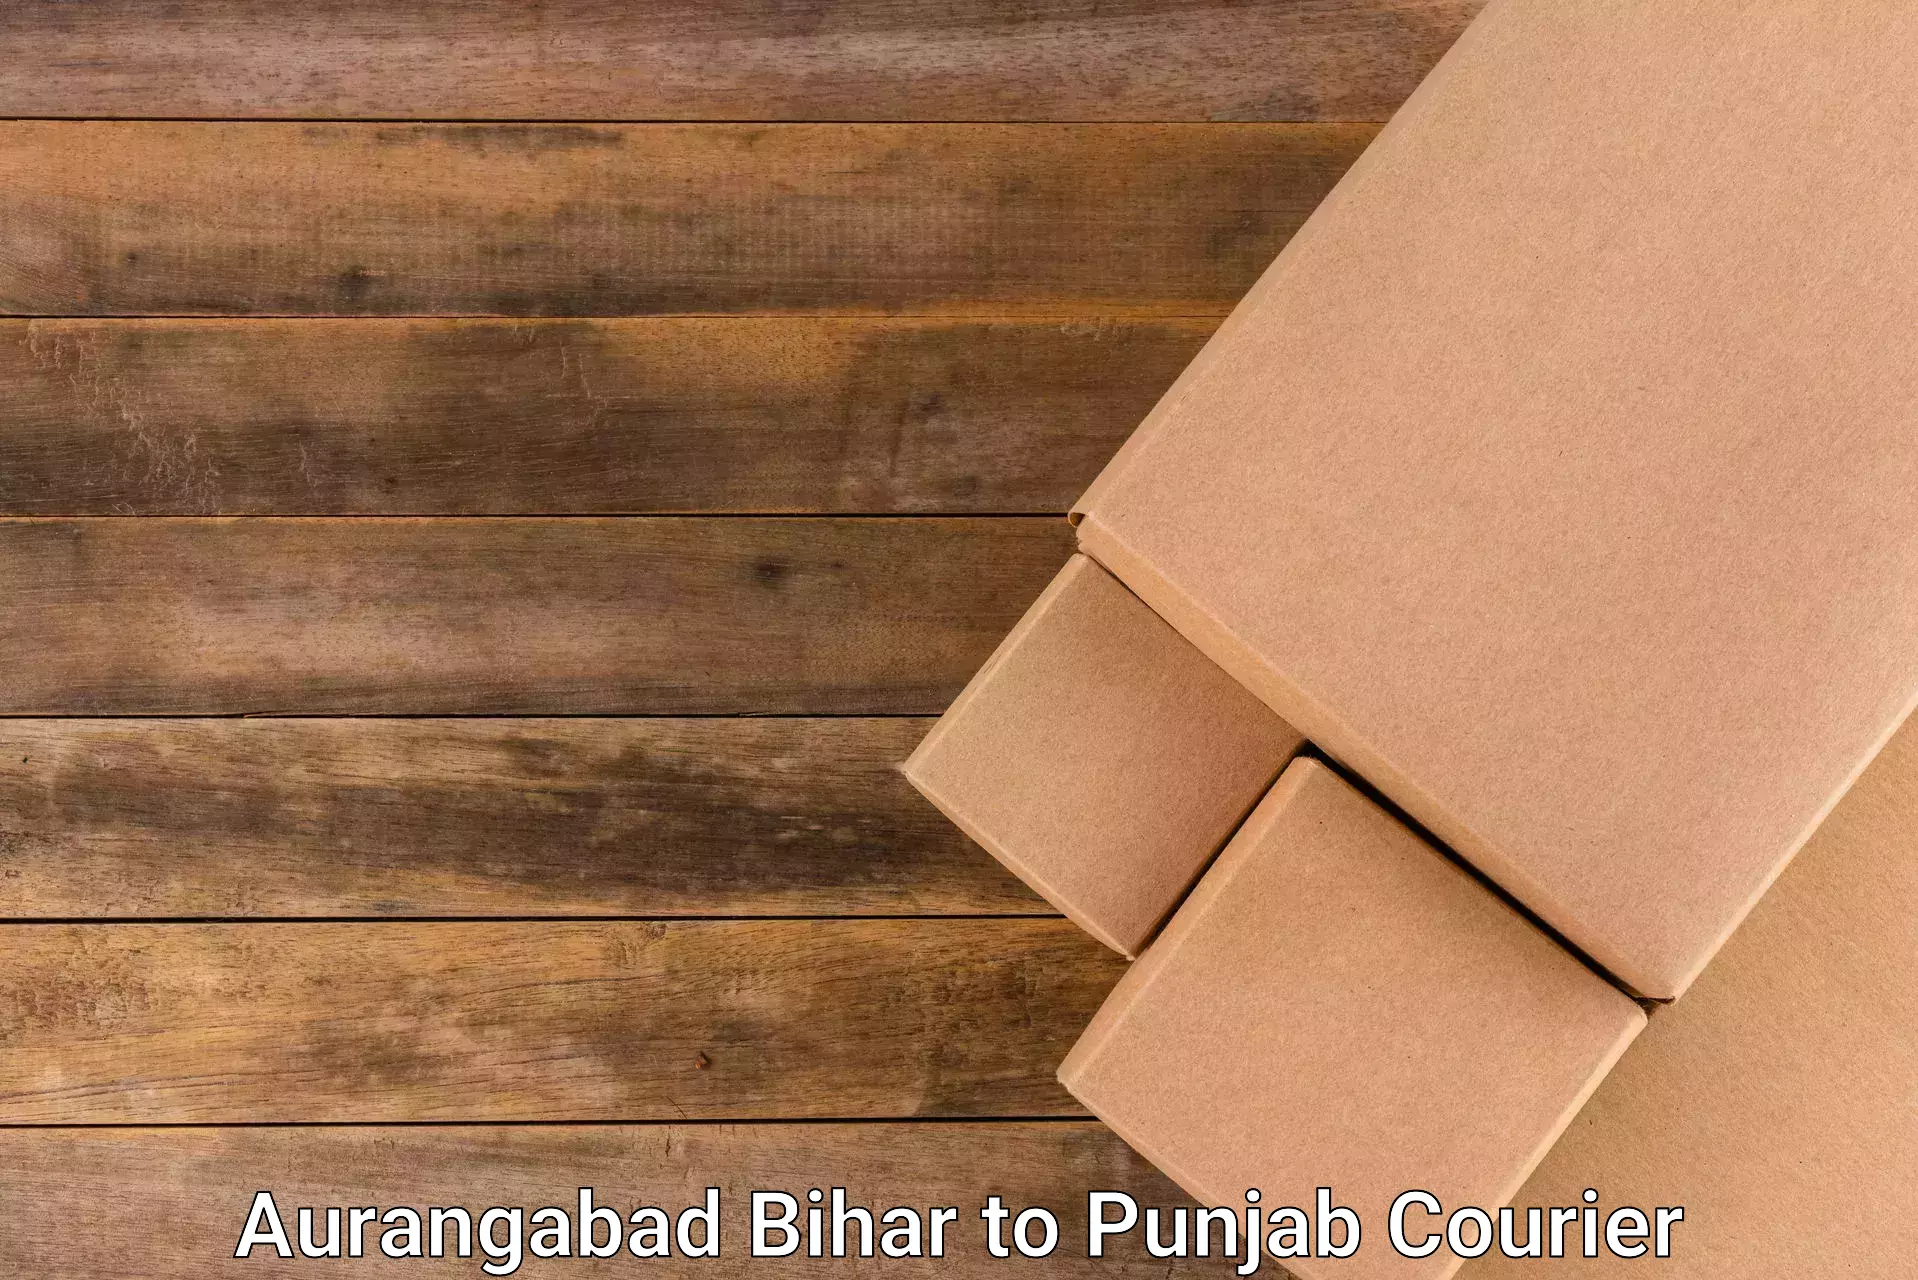 24-hour courier services Aurangabad Bihar to Ajnala